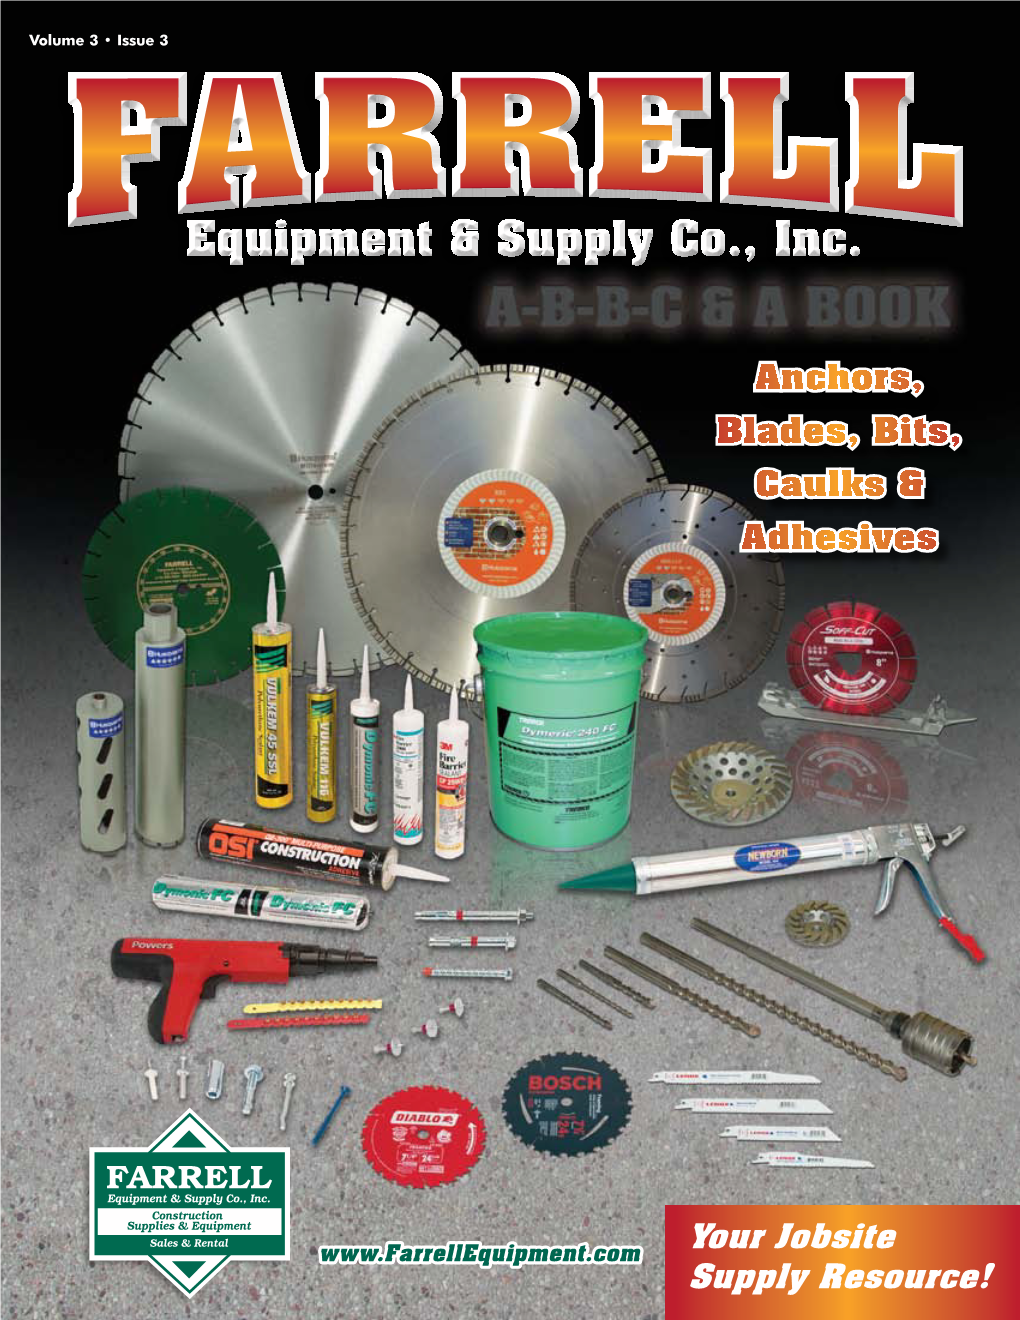 Equipment & Supply Co., Inc